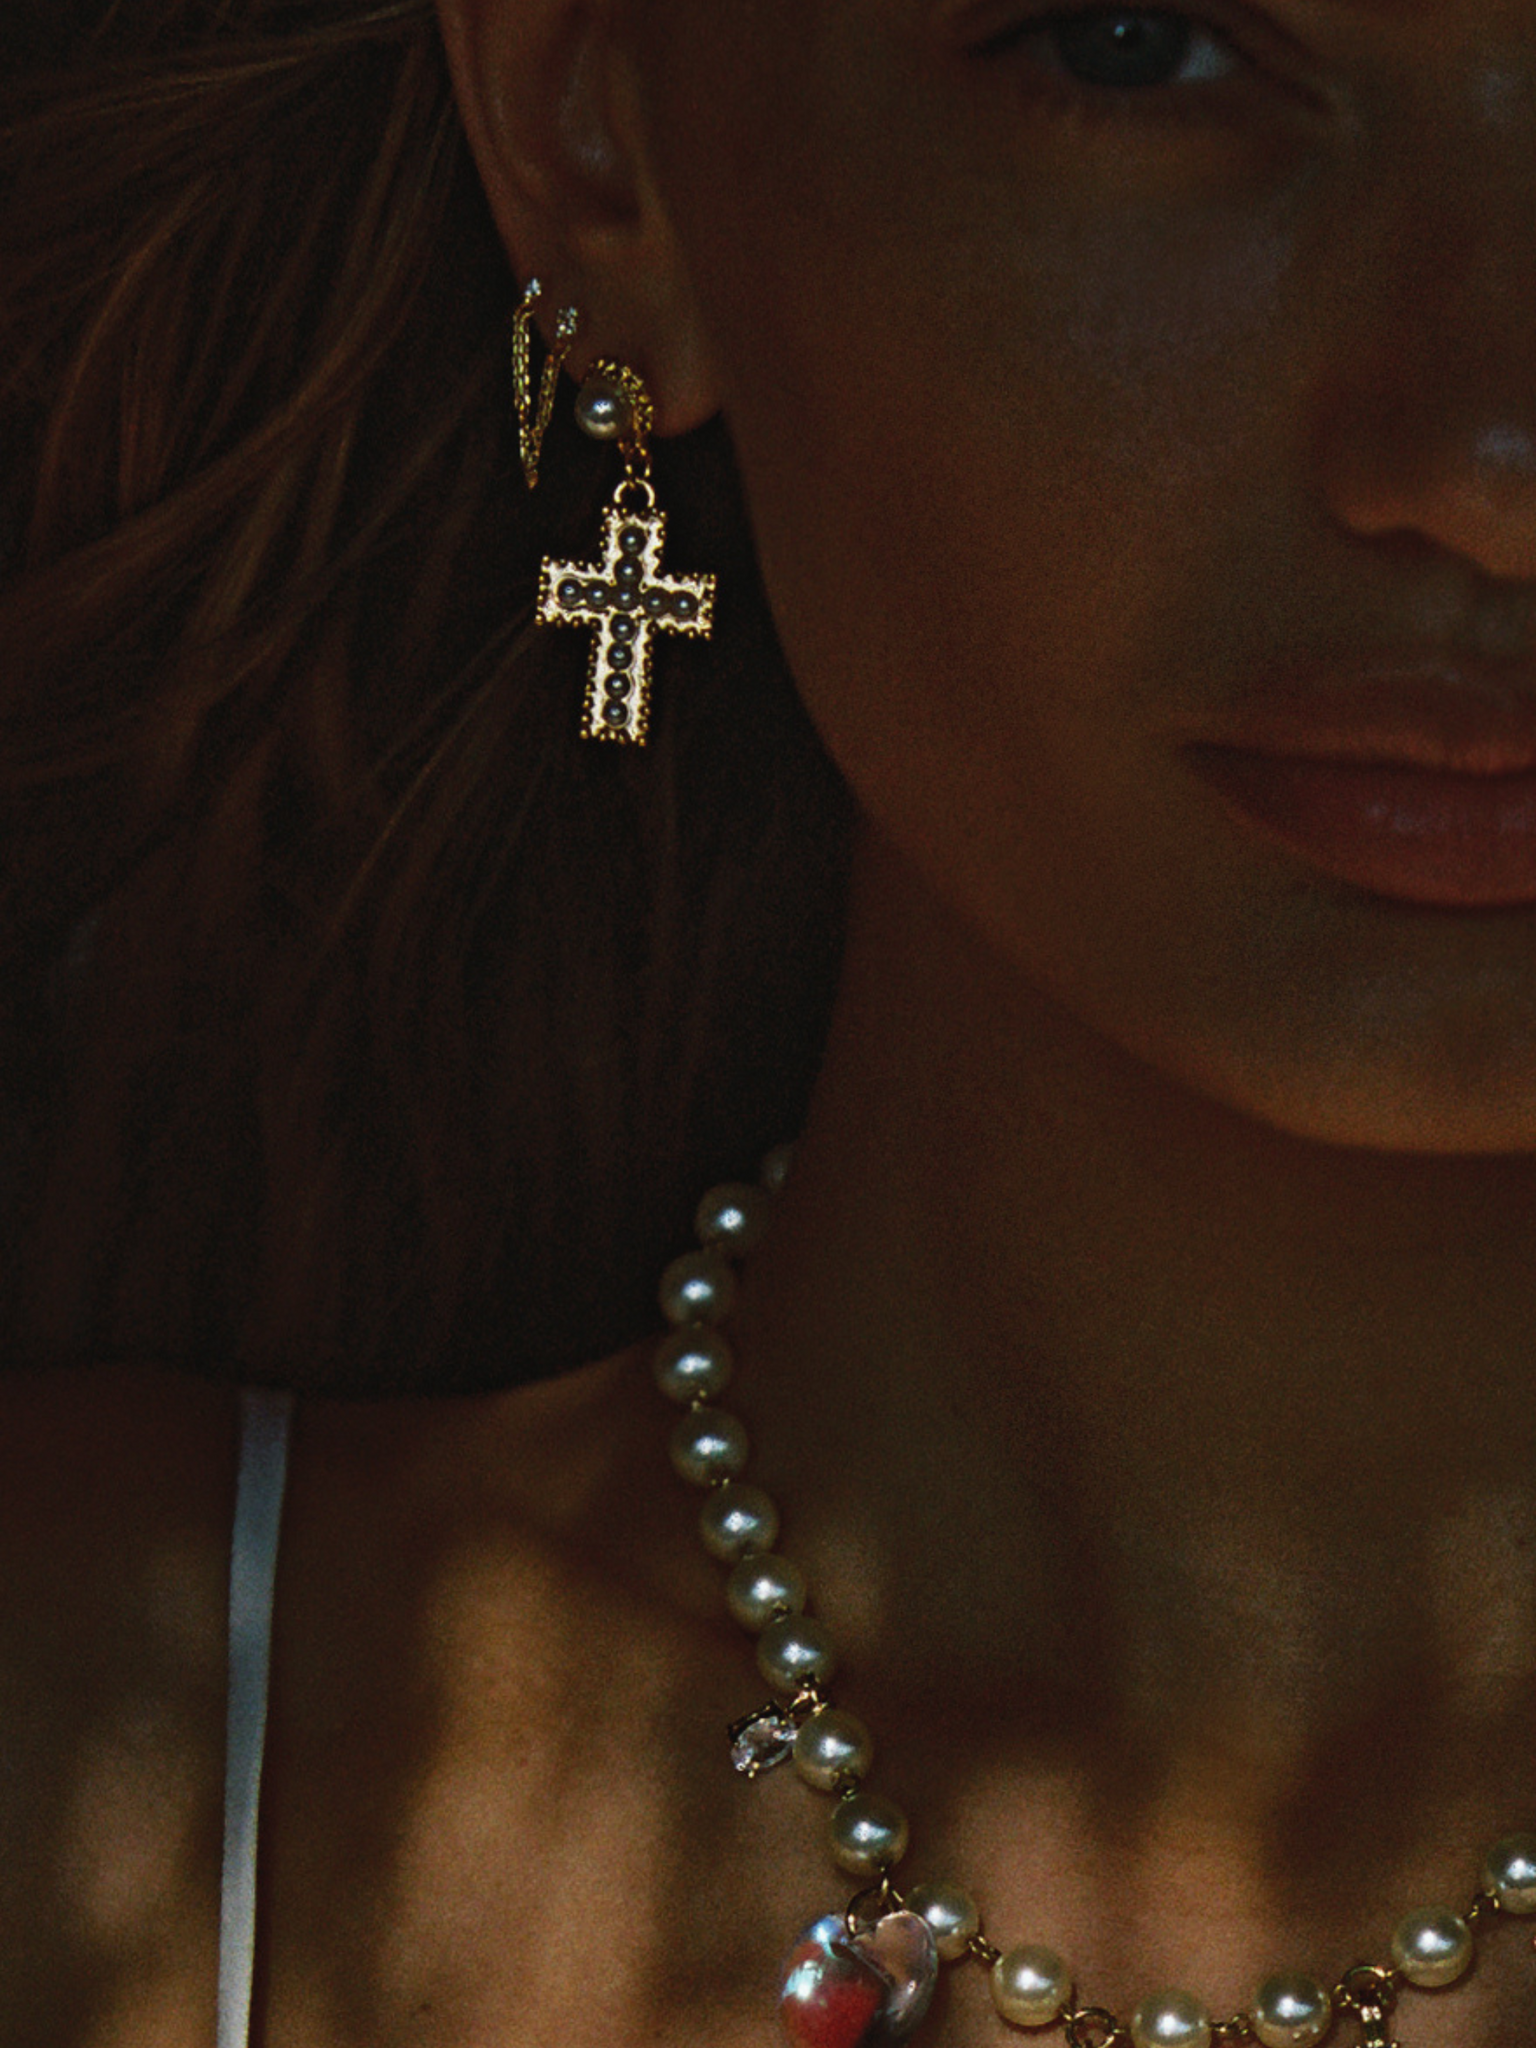 The Nadia Cross Earrings